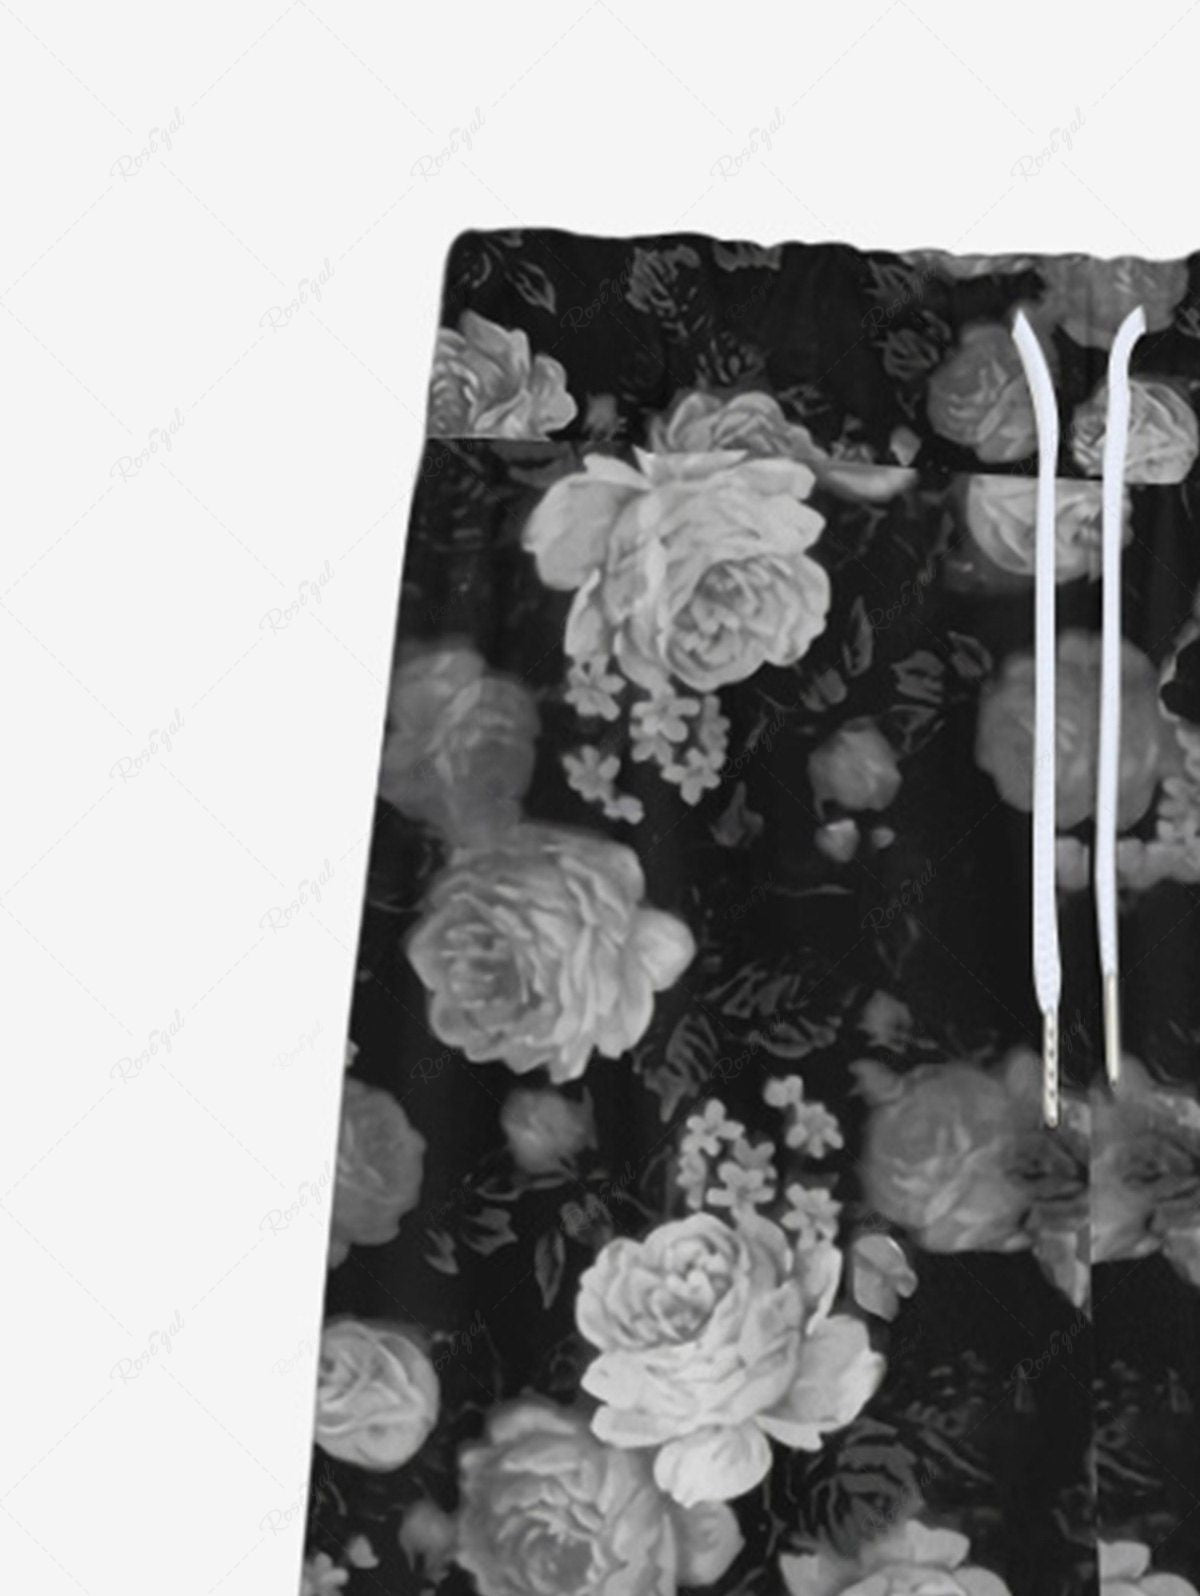 Gothic Rose Flowers Print Wide Leg Drawstring Sweatpants For Men